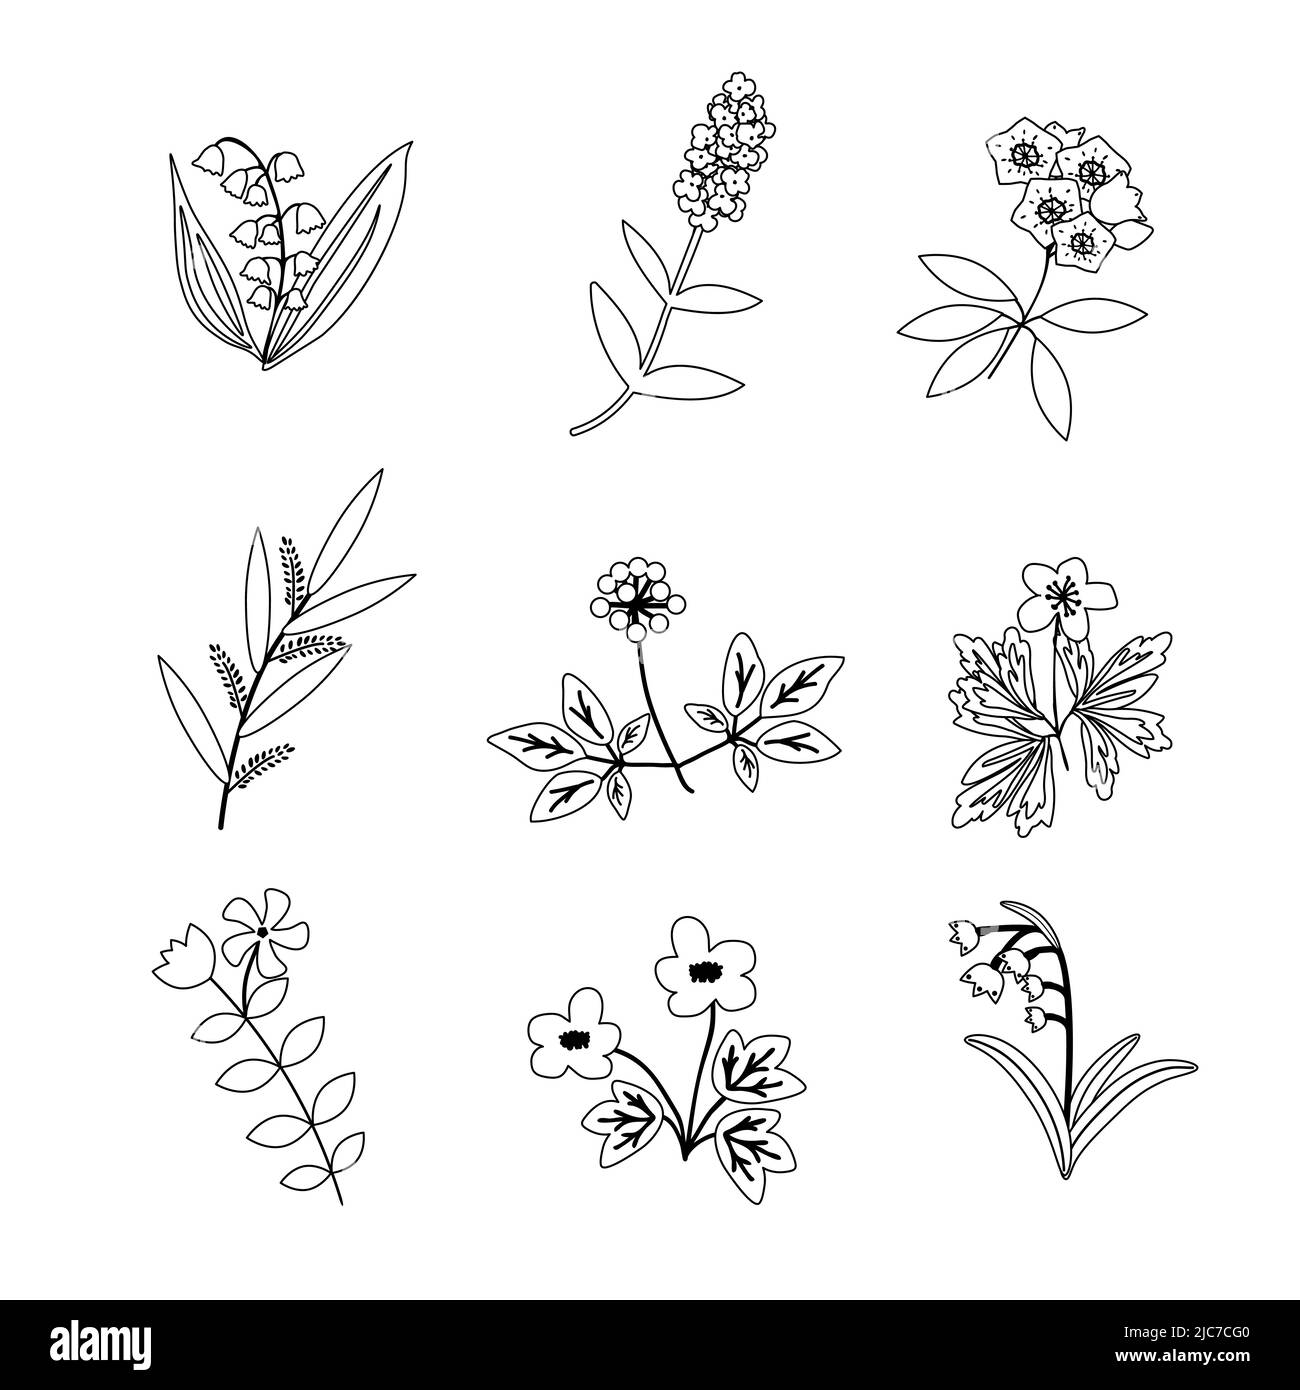 Isolierte Vektor-Pflanzen botanische Sammlung Stock Vektor